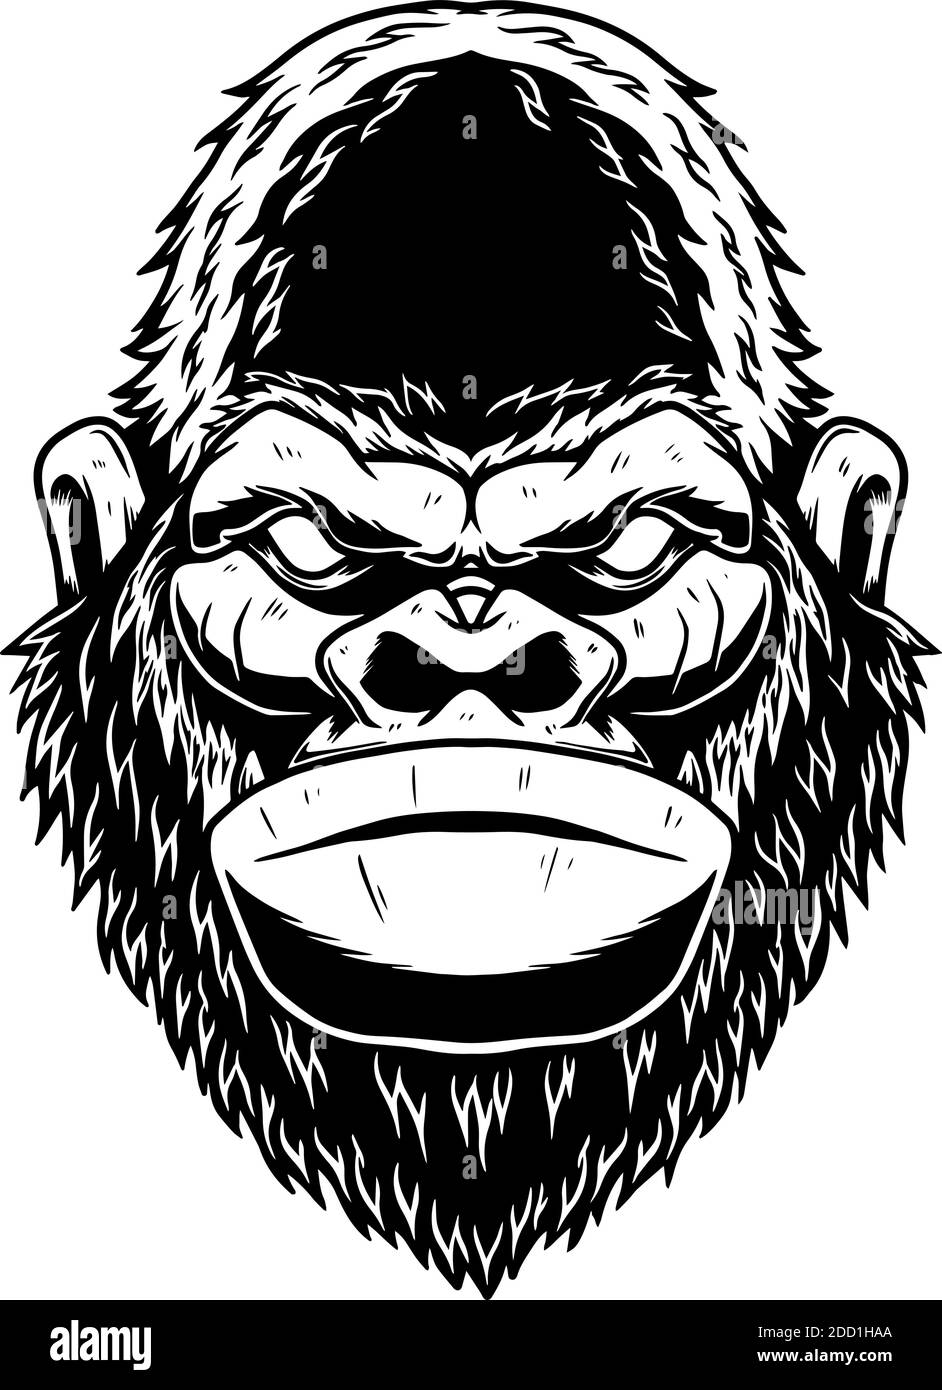 Illustration des Kopfes des wütenden Affen im monochromen Vintage-Stil. Gestaltungselement für Logo, Emblem, Schild, Plakat, Karte, Banner. Vektorgrafik Stock Vektor